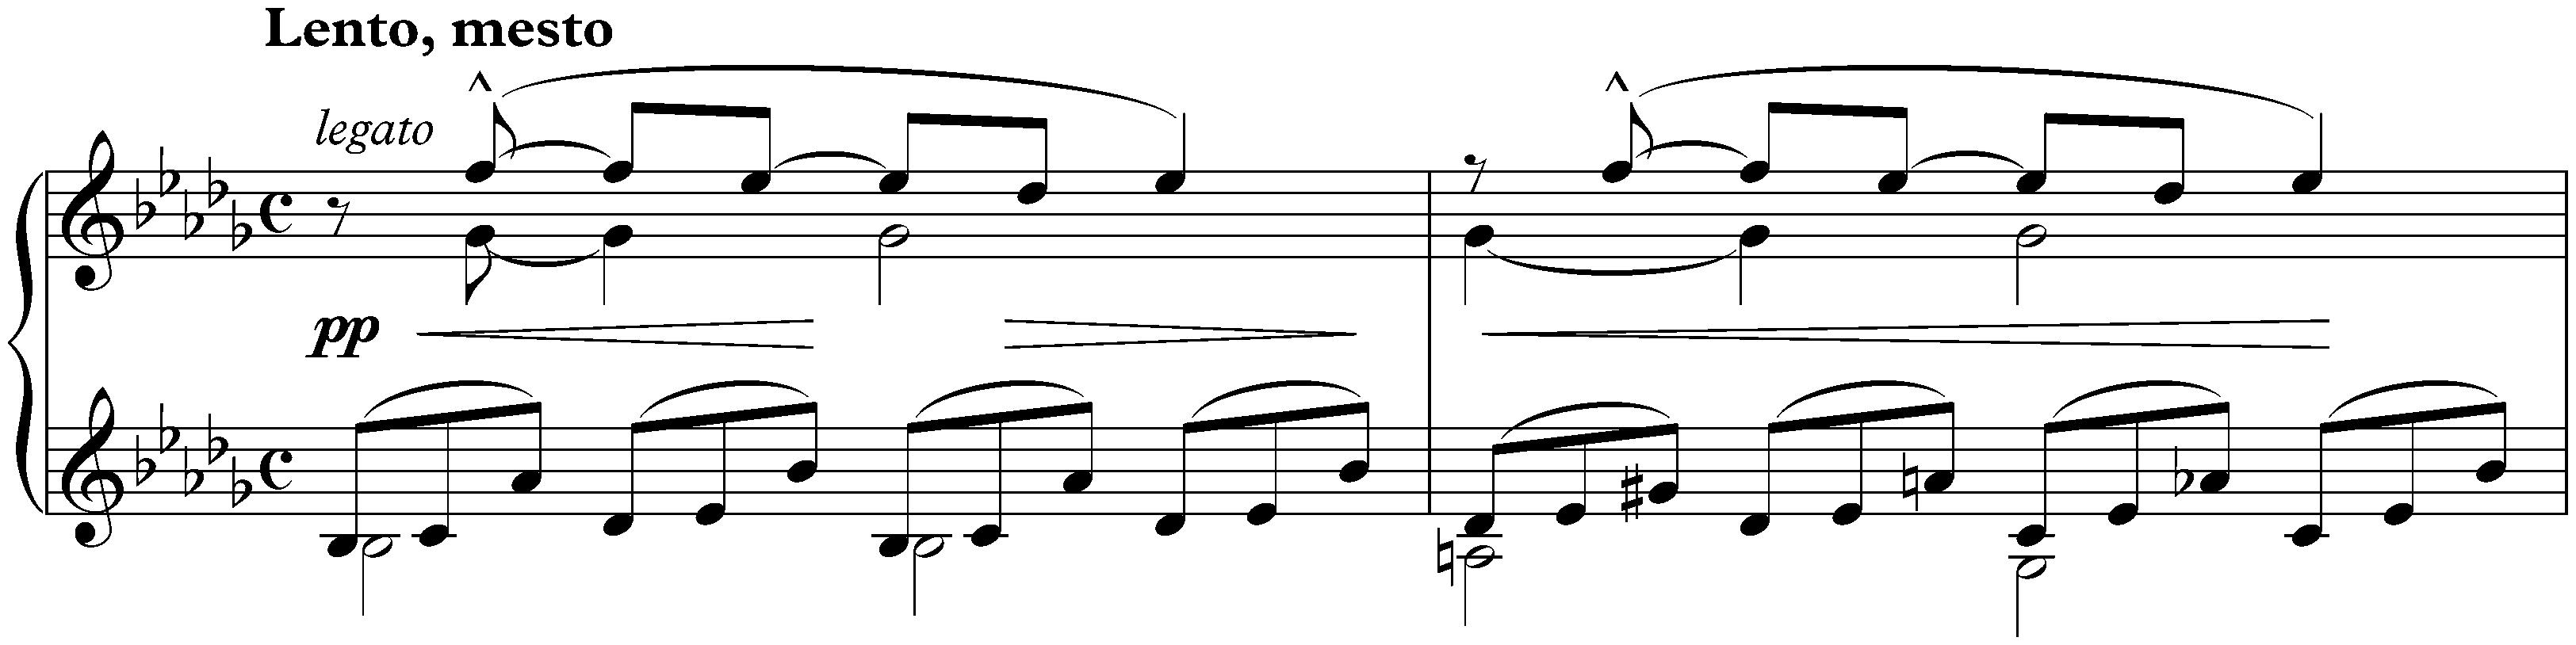 Nine Preludes, op. 1; 9. Lento, mesto